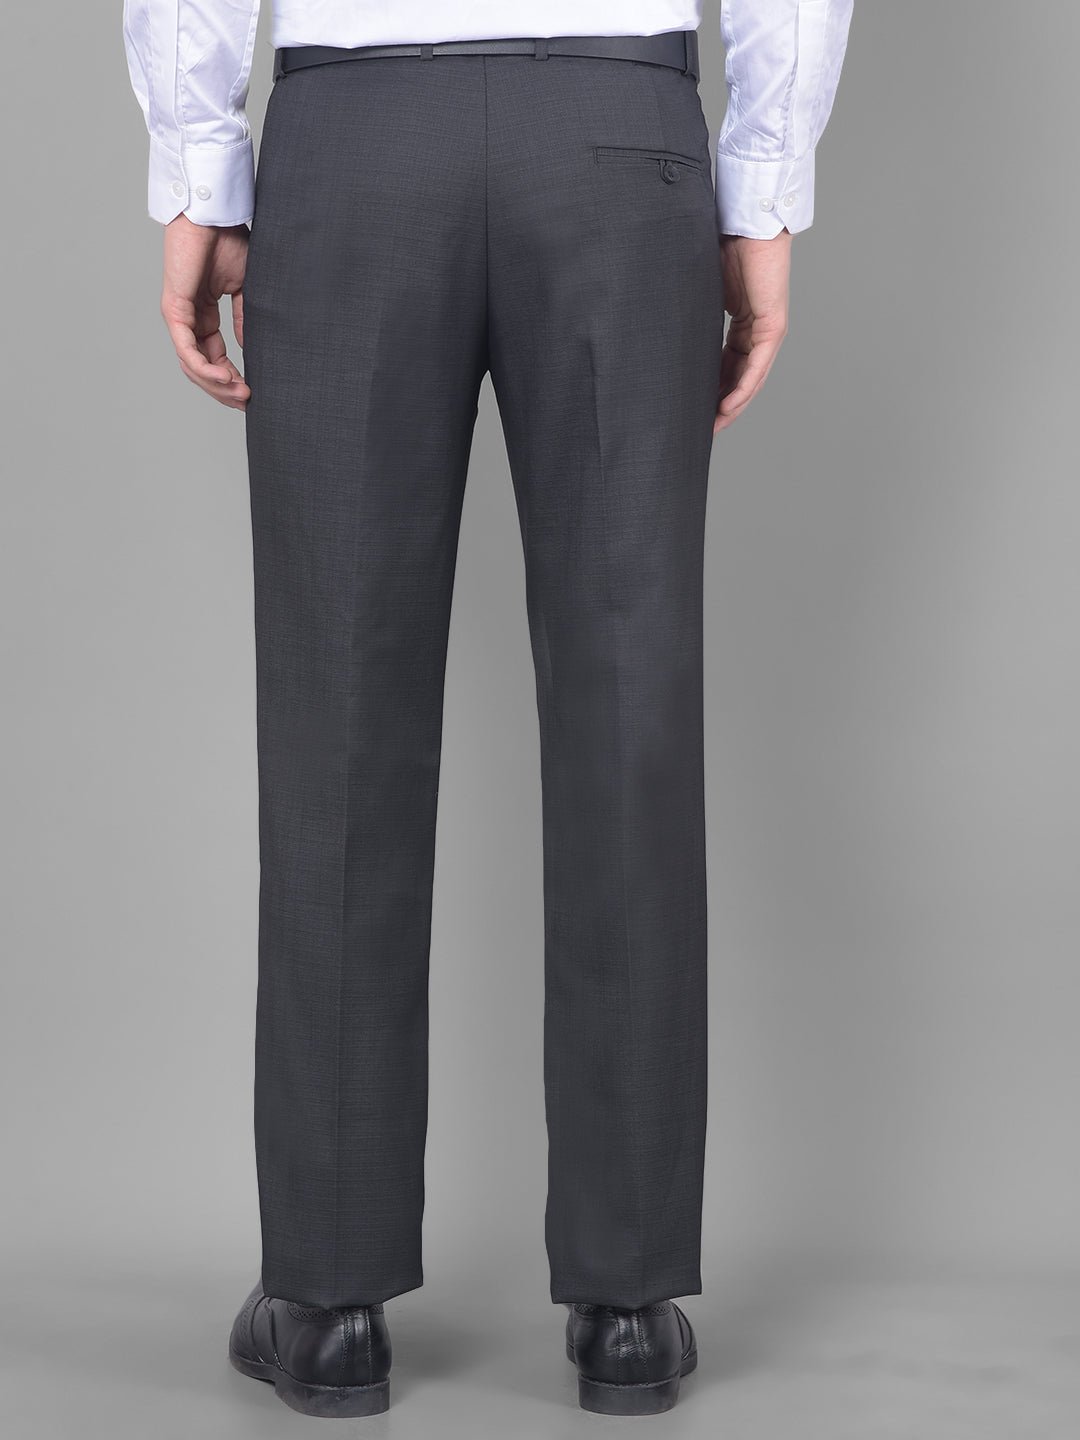 cobb dark grey ultra fit formal trouser